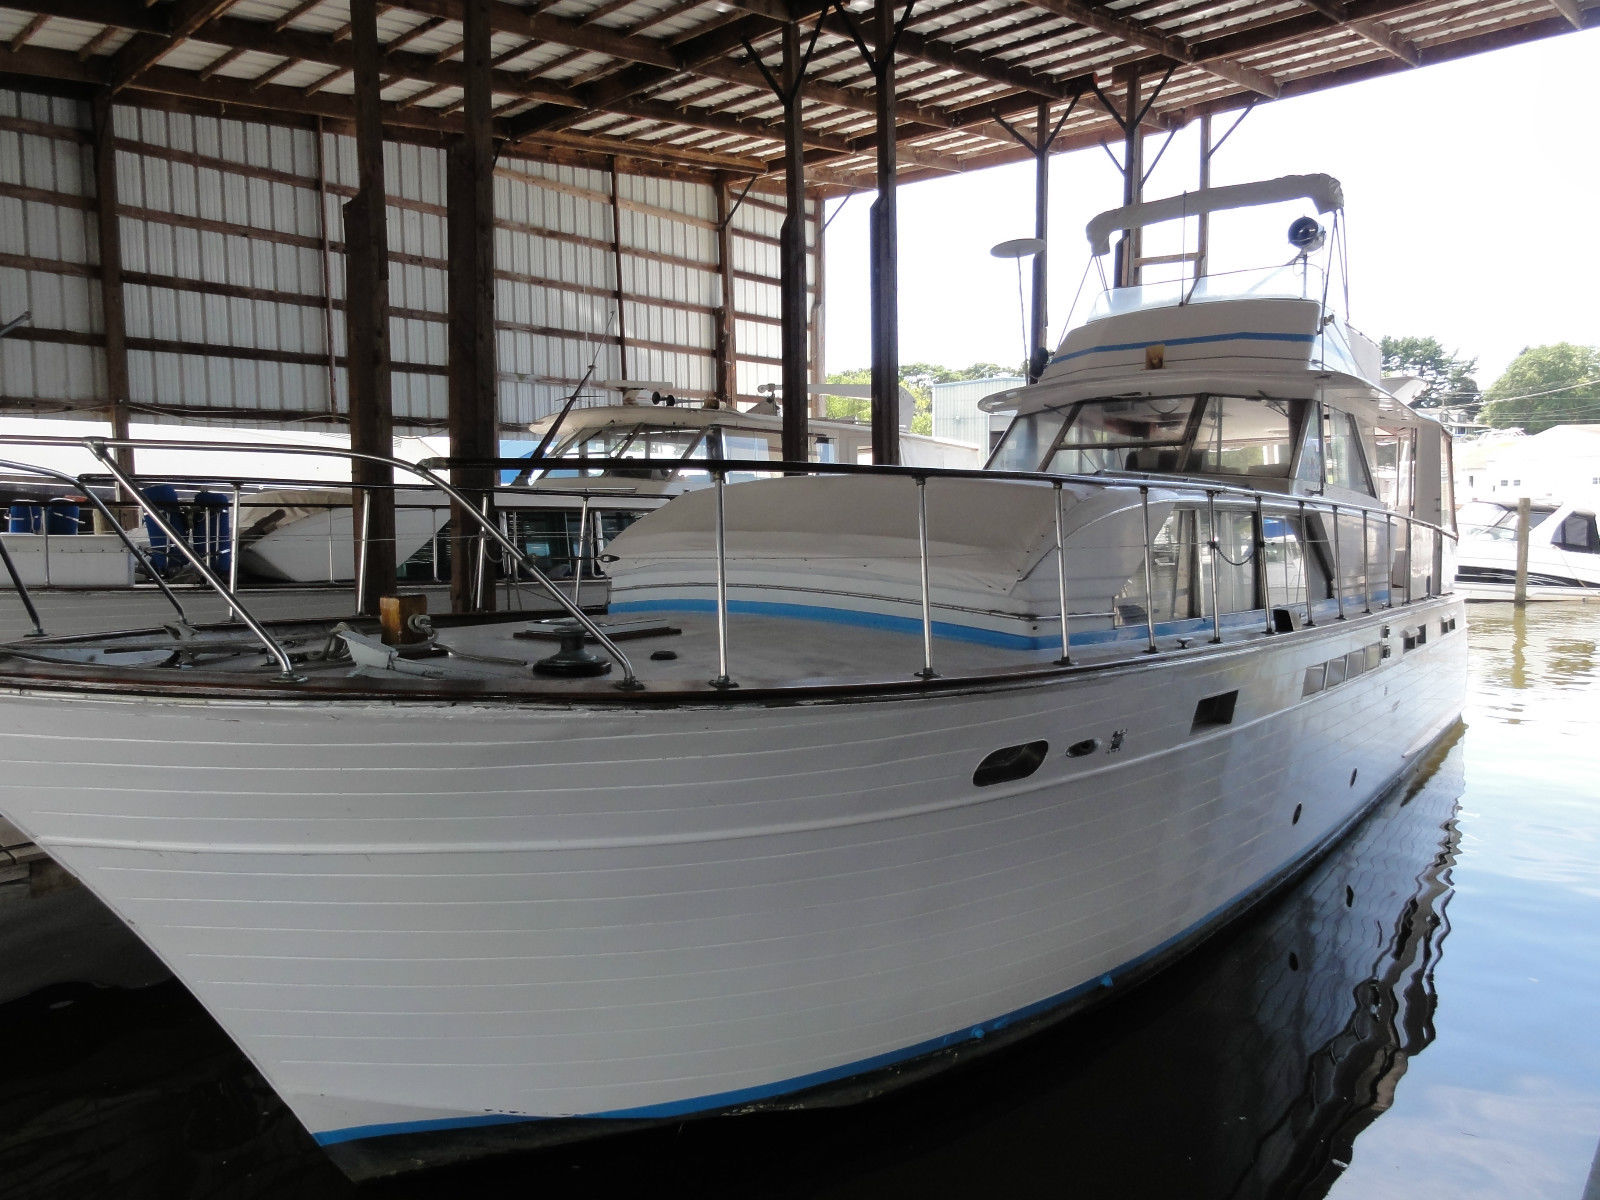 65' chris craft motor yacht